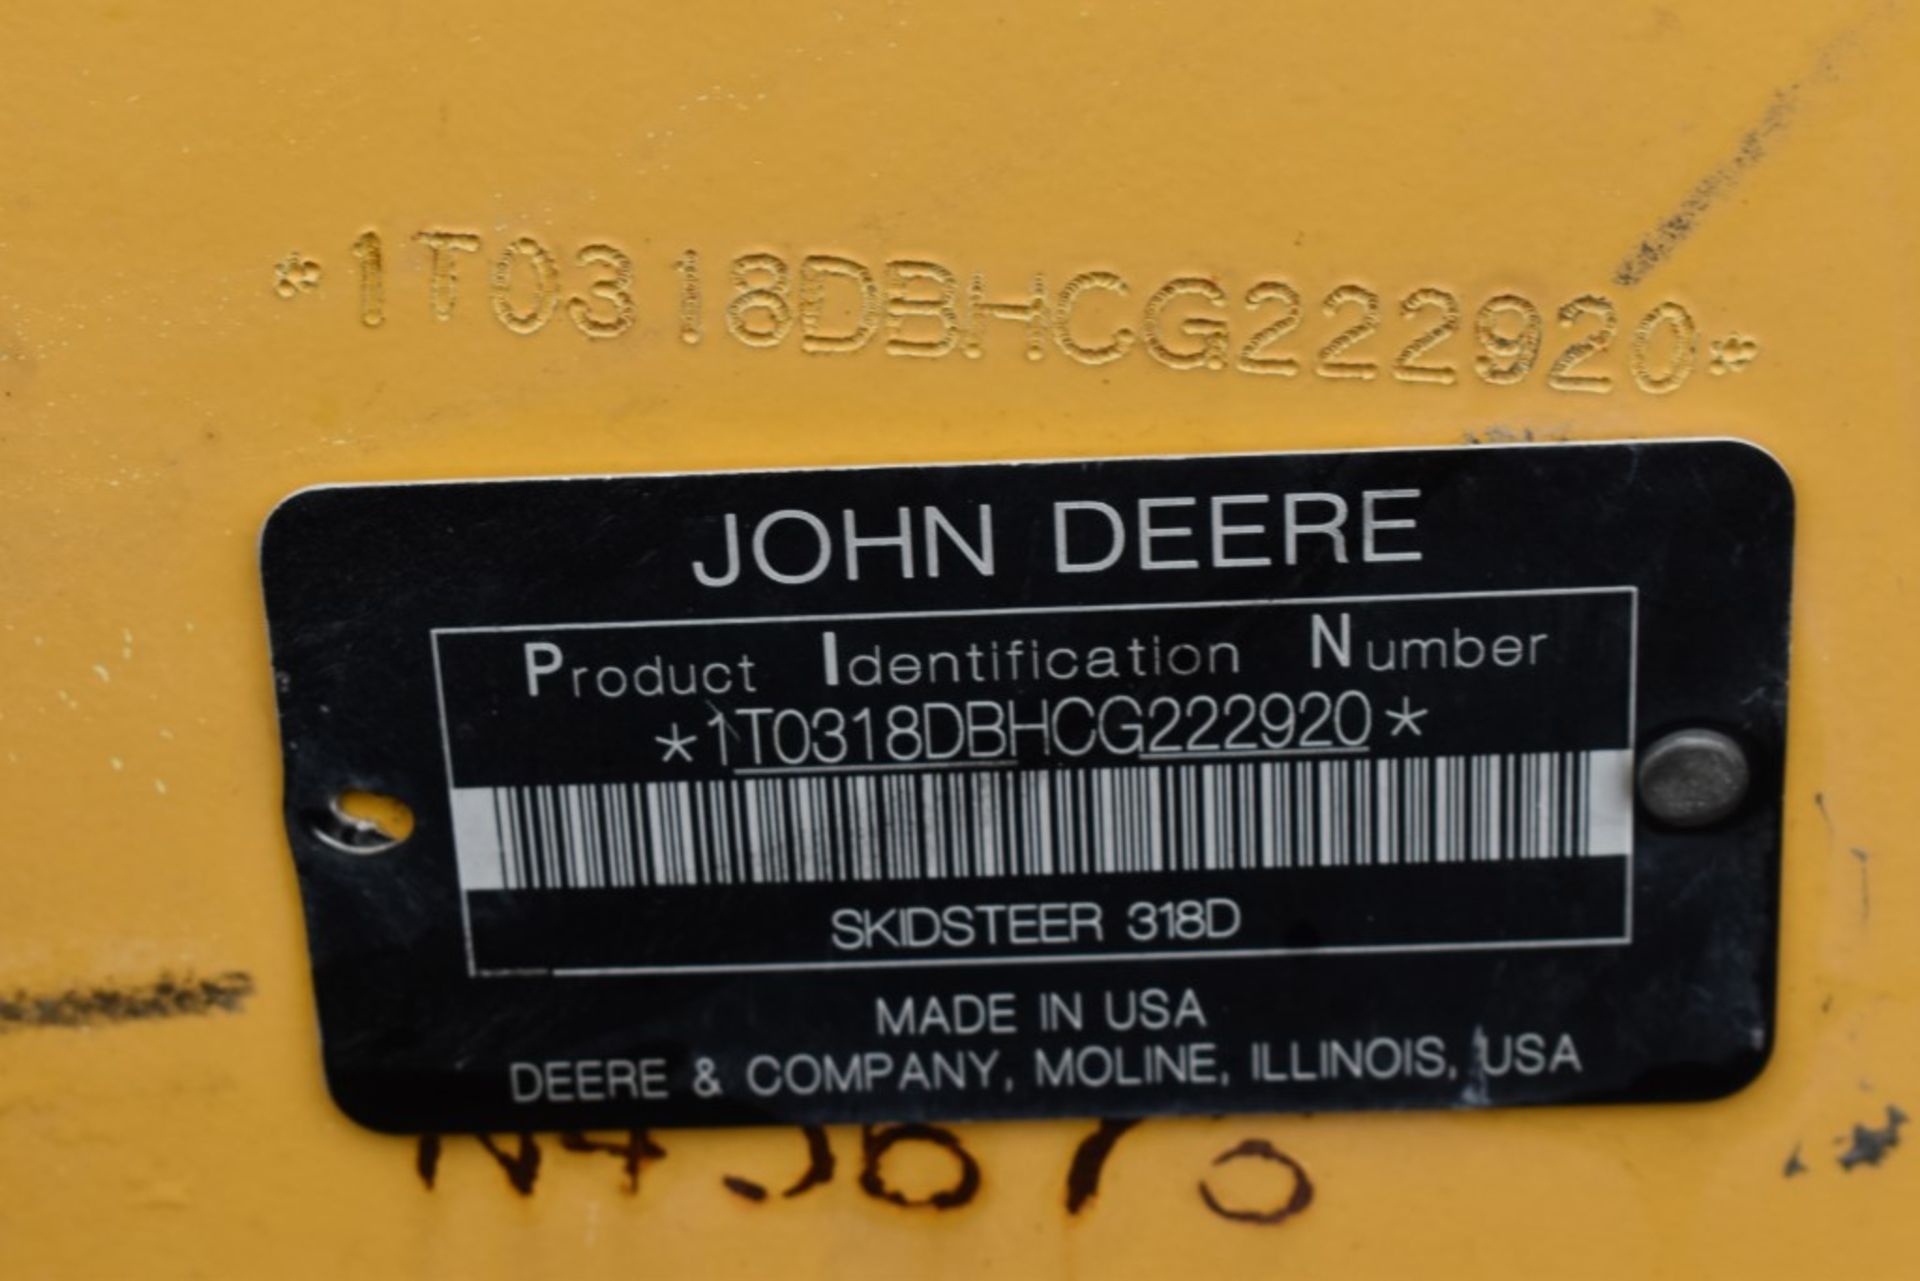 John Deere 318D Skid Steer 3488 Hours, Runs and Drives, Hydraulic Quick Attach, John Deere - Image 21 of 21